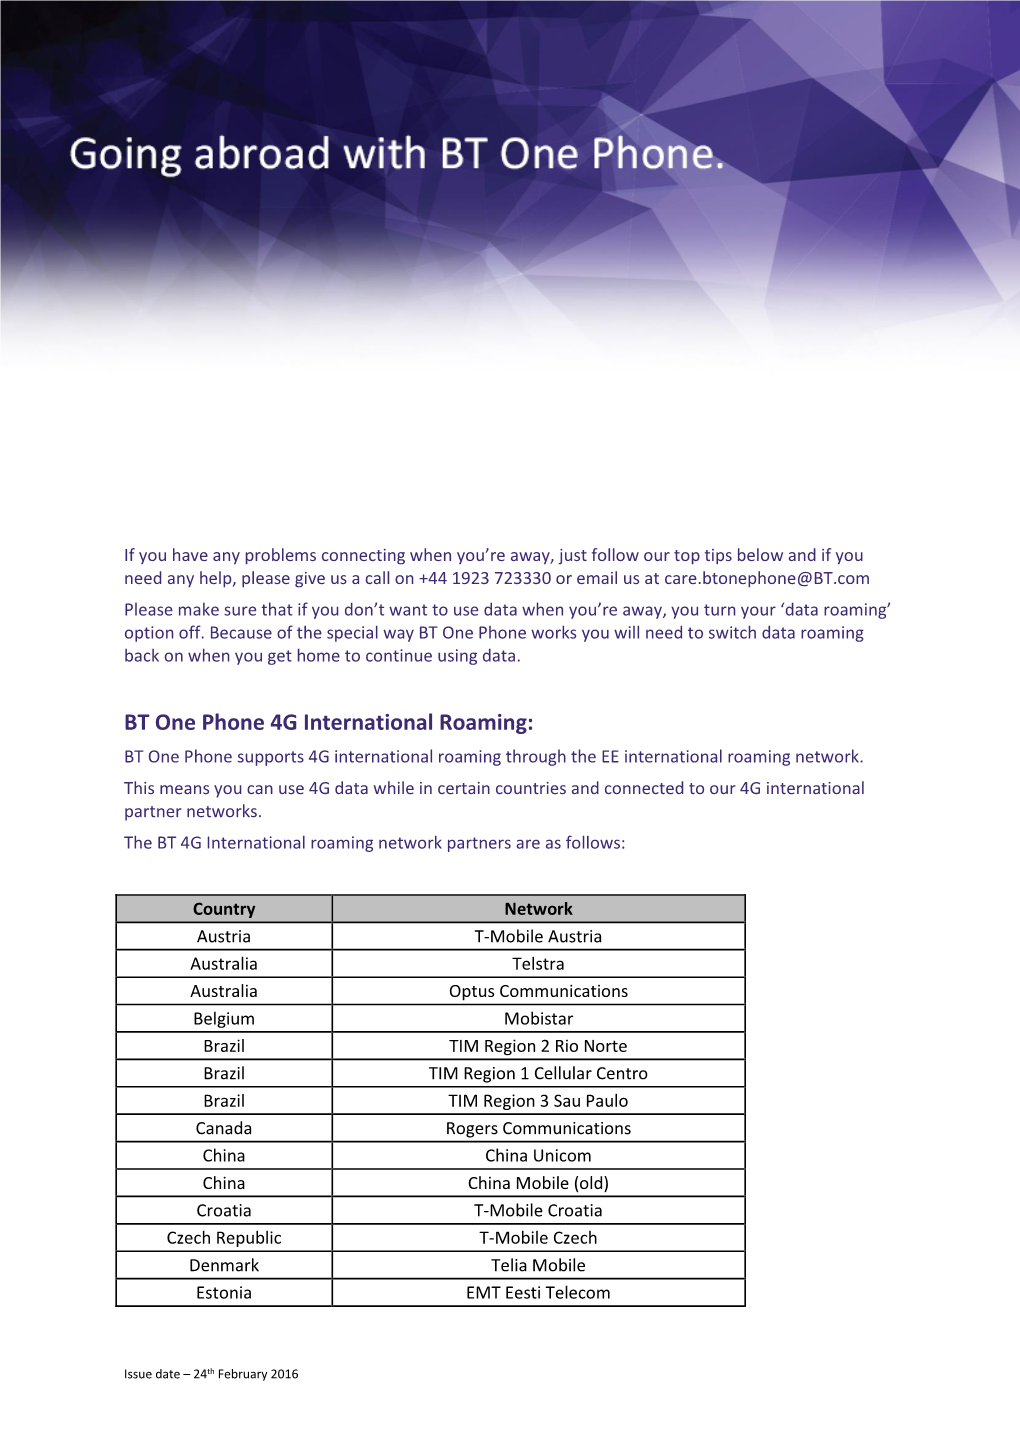 BT One Phone 4G International Roaming: BT One Phone Supports 4G International Roaming Through the EE International Roaming Network